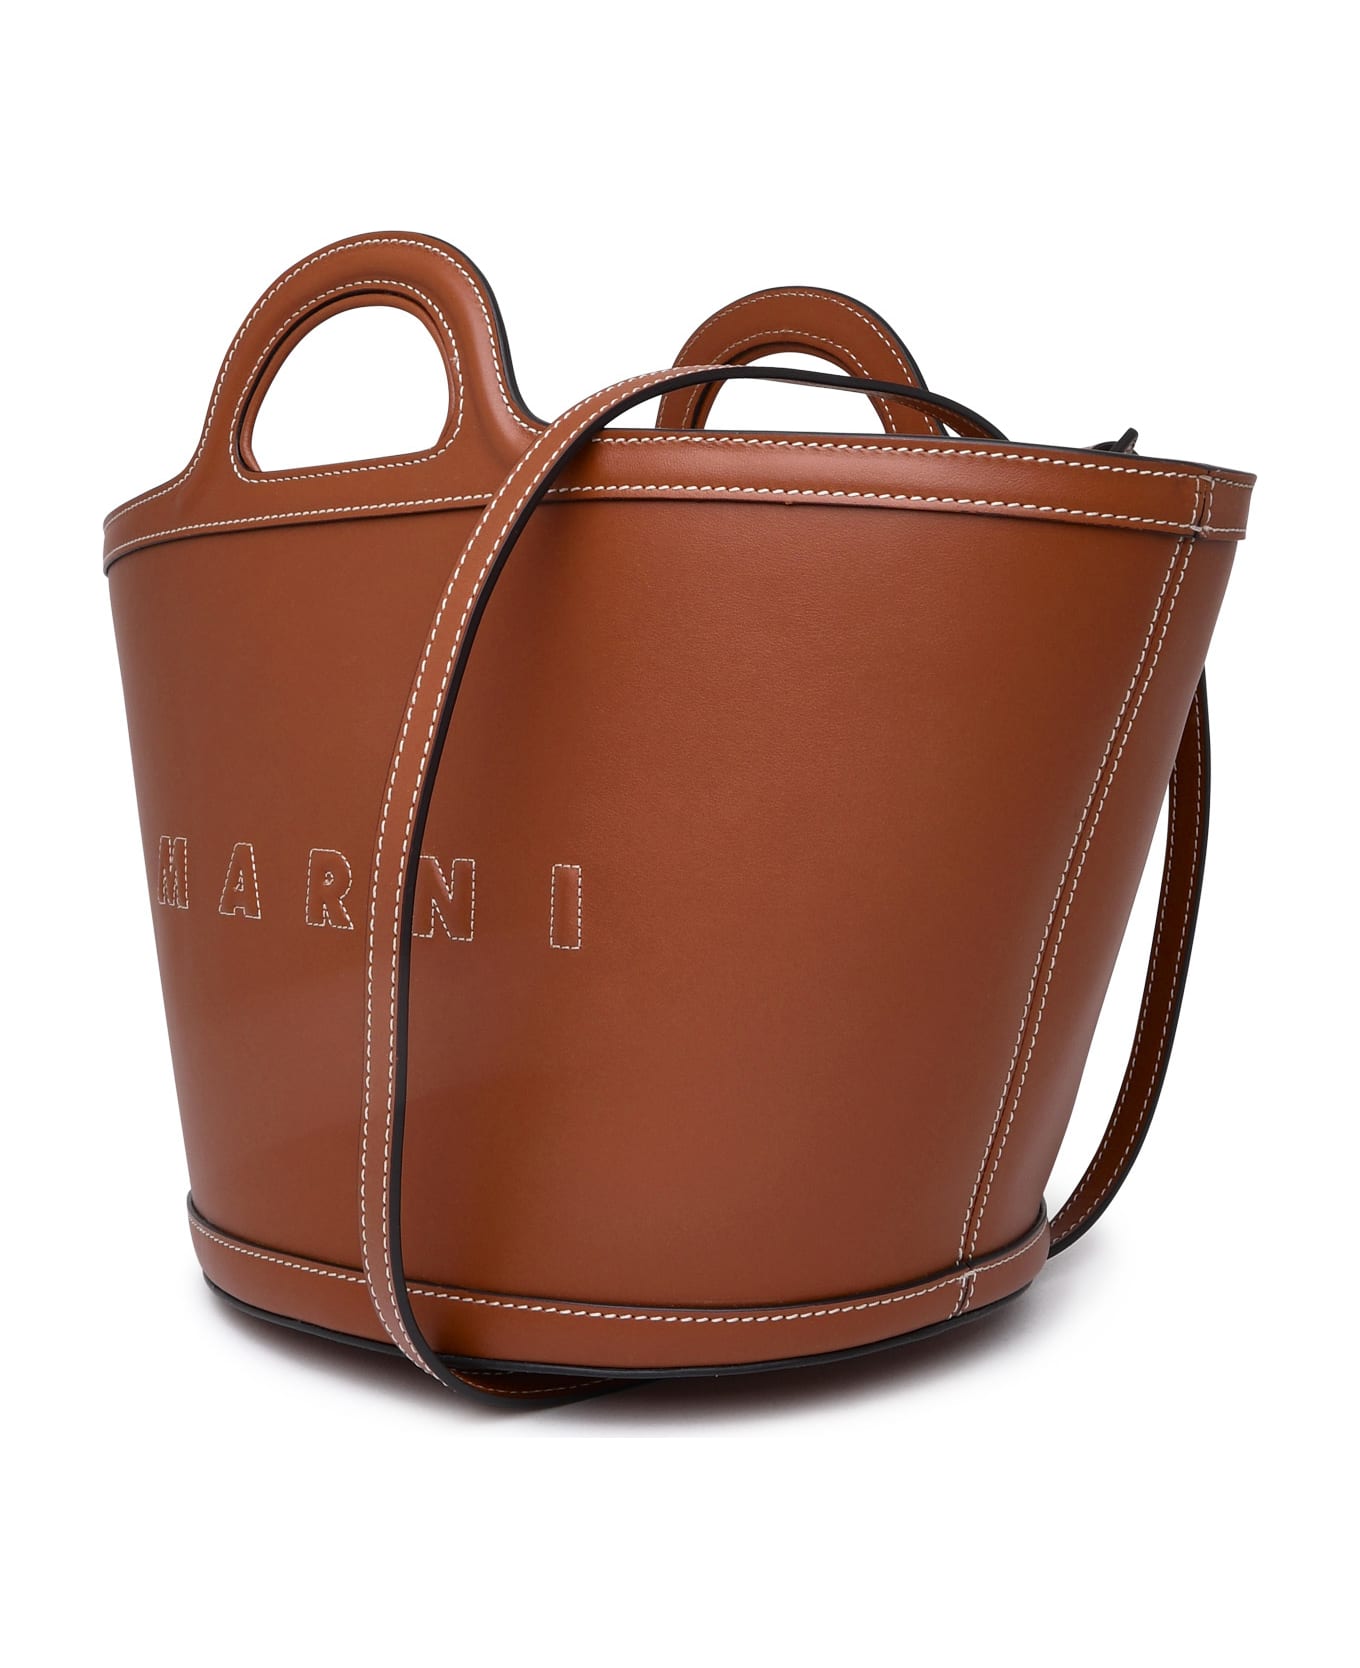 Marni Tropicalia Small Bag In Brown Leather - Brown